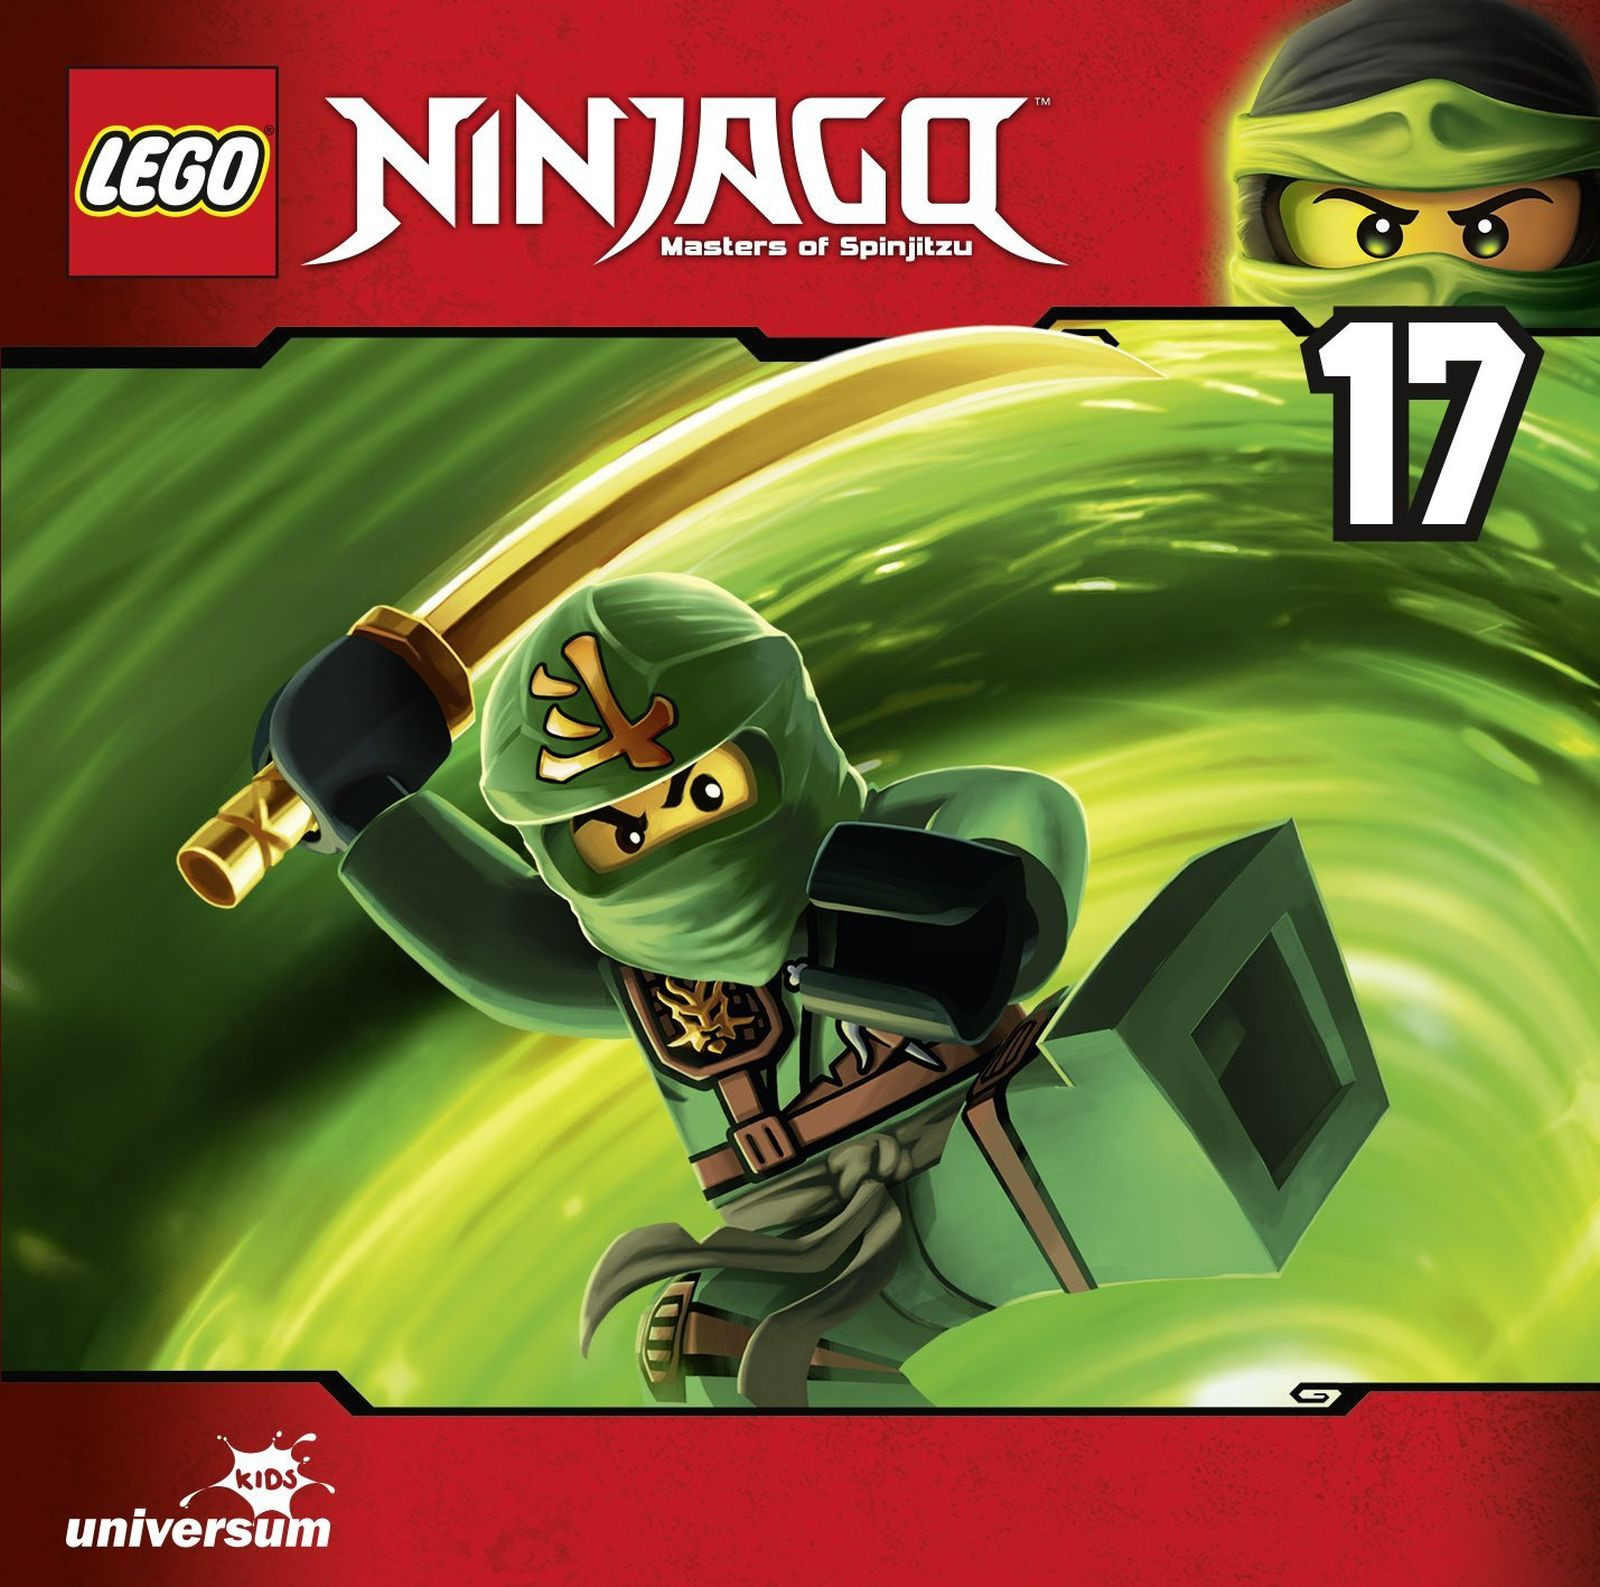 LEGO Ninjago 5. Staffel (CD 17)